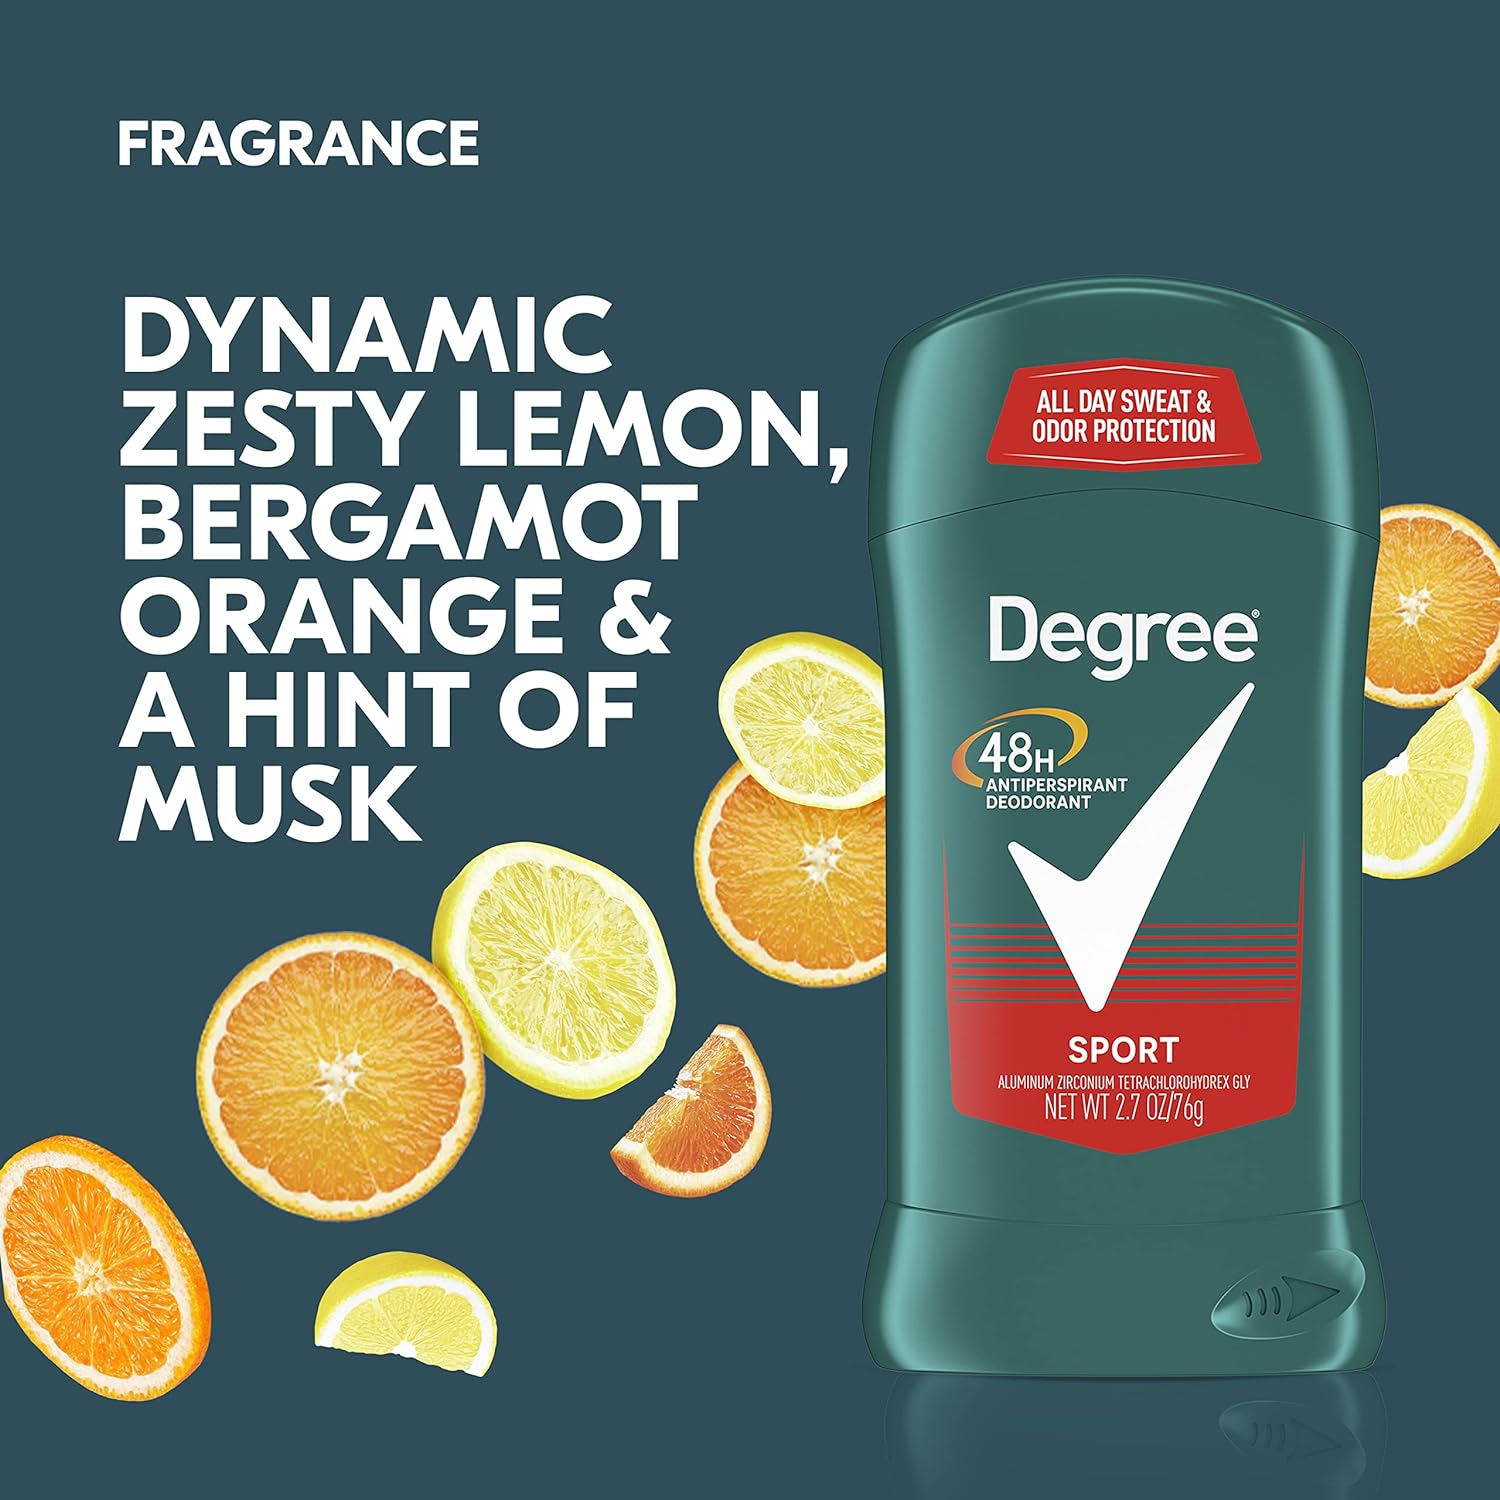 Degree Men Original Antiperspirant Deodorant for Men, Pack of 6, 48-Hour Sweat and Odor Protection, Sport 2.7 oz : Beauty & Personal Care